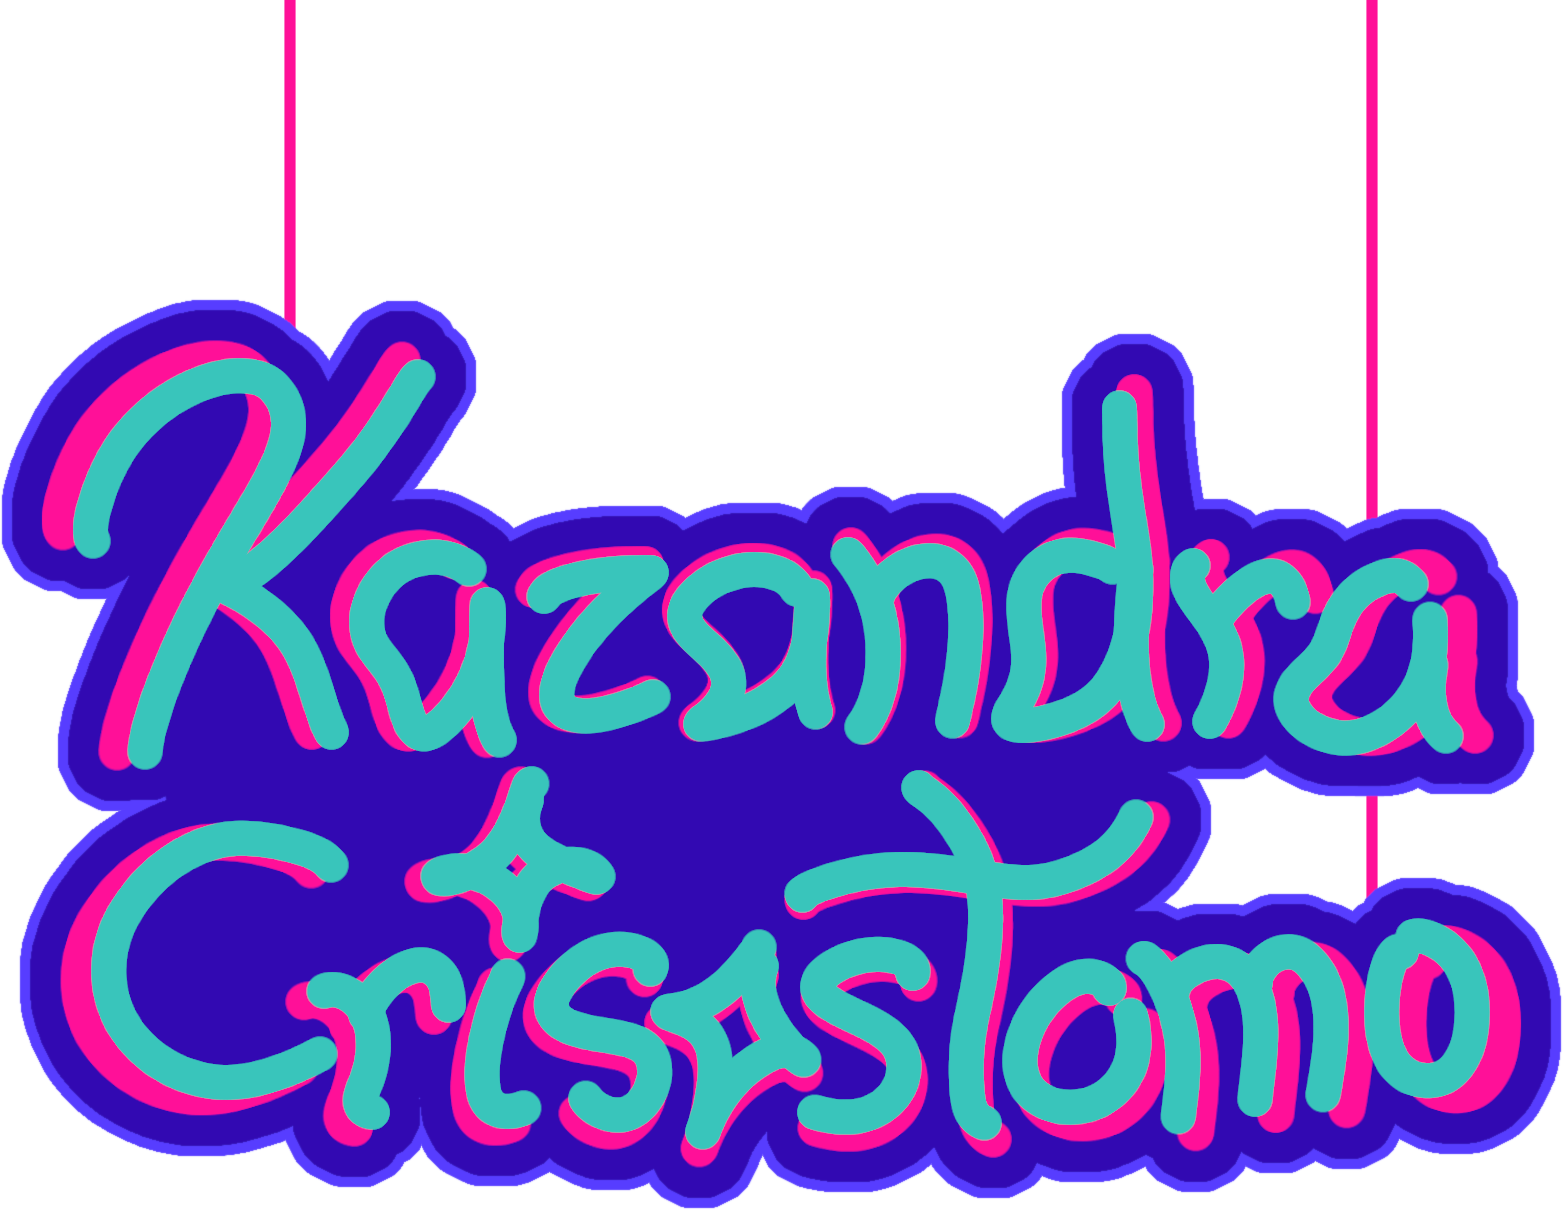 Signboard reading: Kazandra Crisostomo